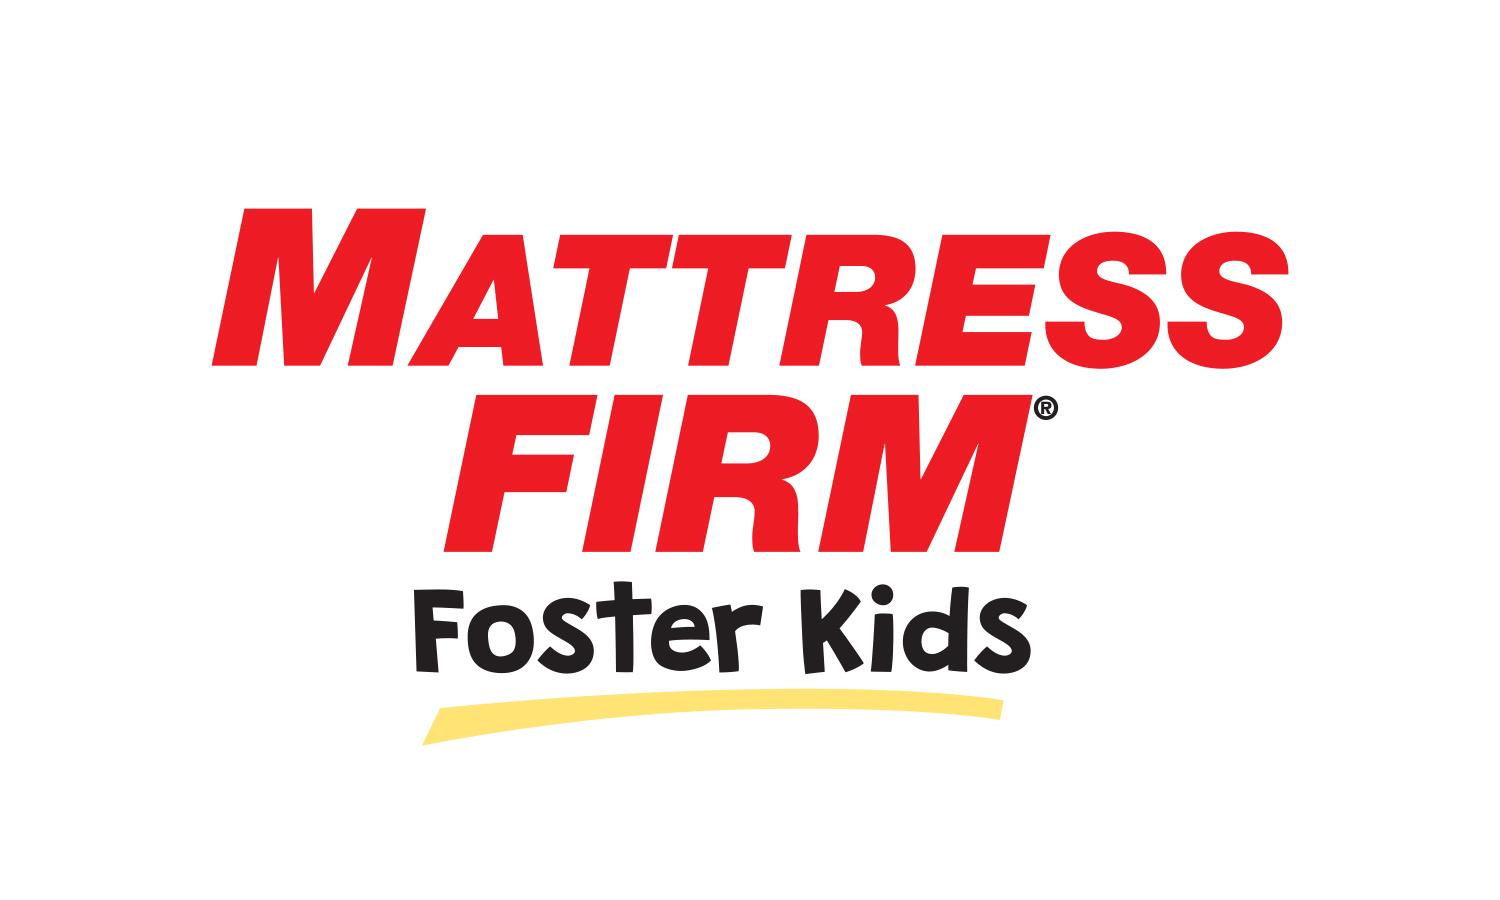 mattress firm foster care shoes